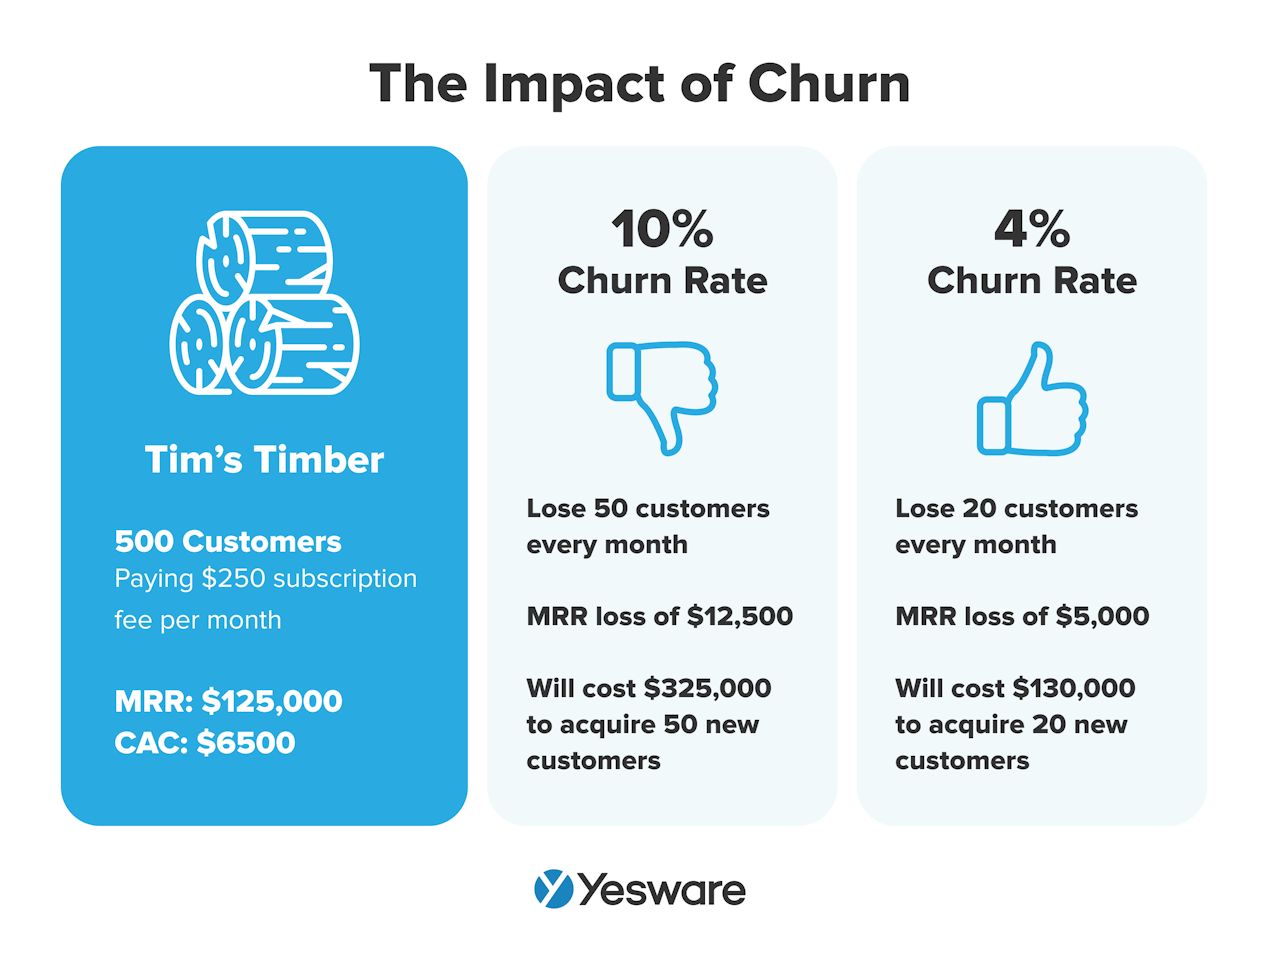 churn definition: the impact of churn